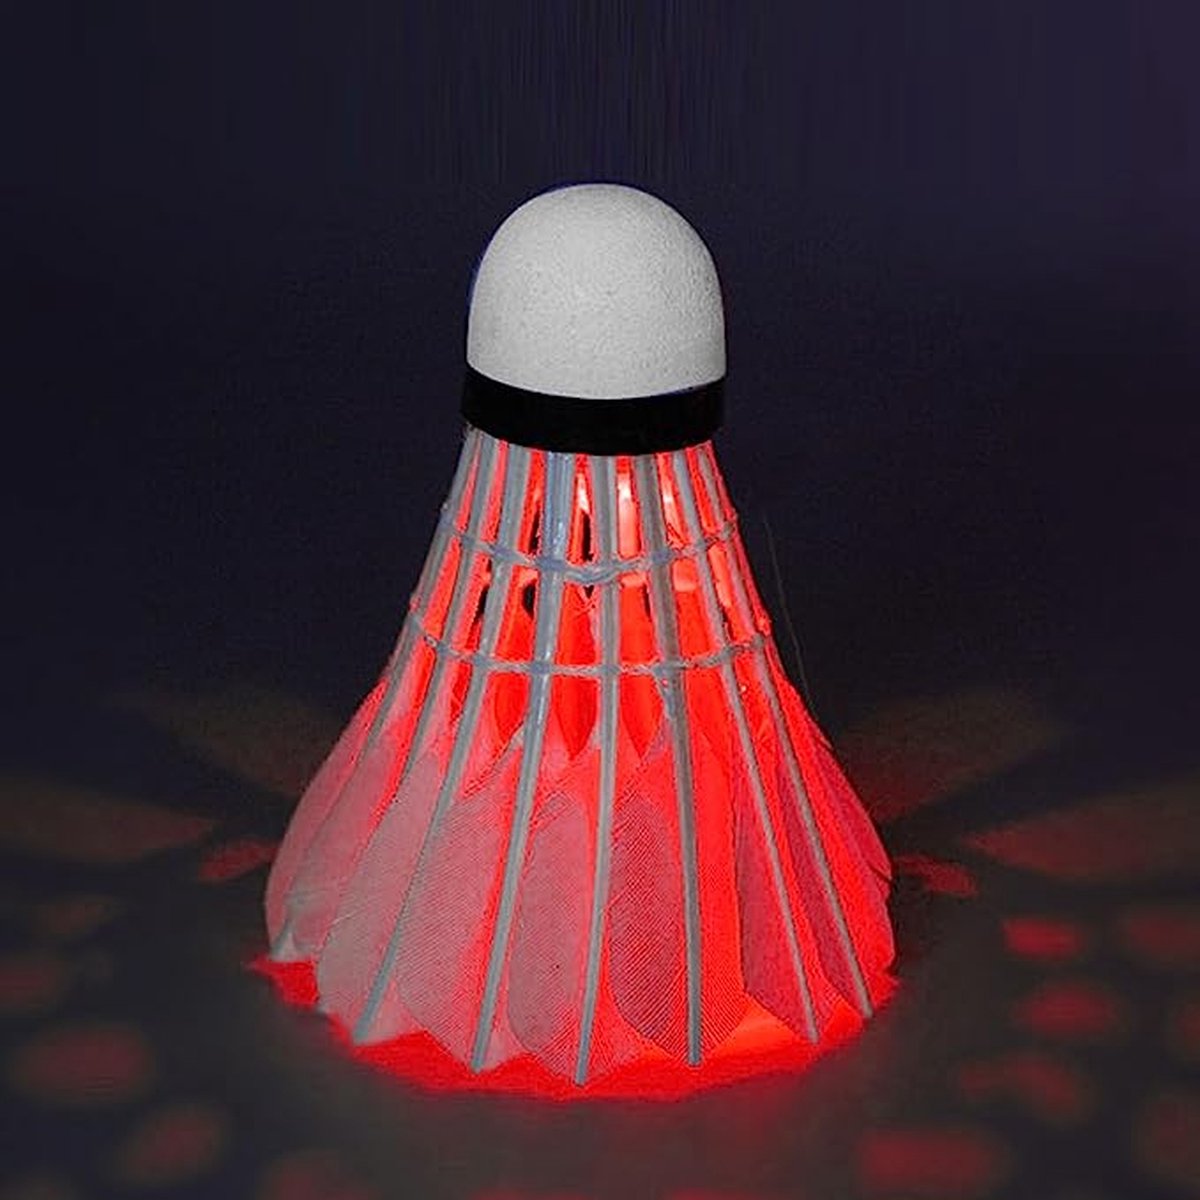 Relaxdays Volant lumineux, set de 8, balle badminton LED, HxD : 8,5 x 6,5  cm